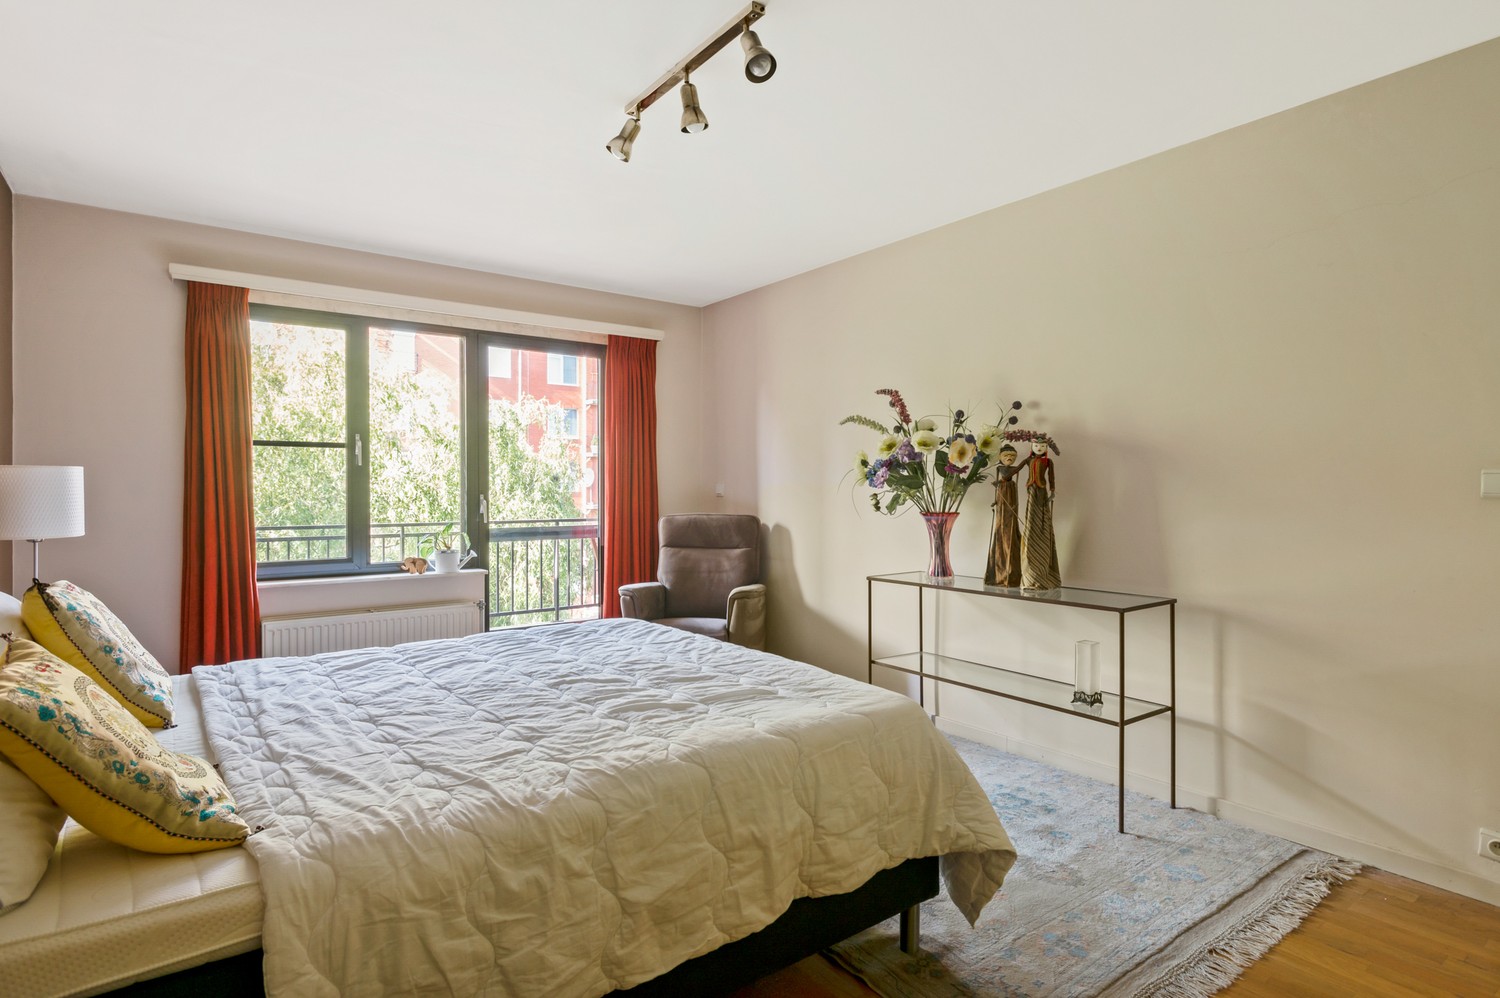 Ruim appartement met twee slaapkamers op ideale locatie in Deurne! afbeelding 13